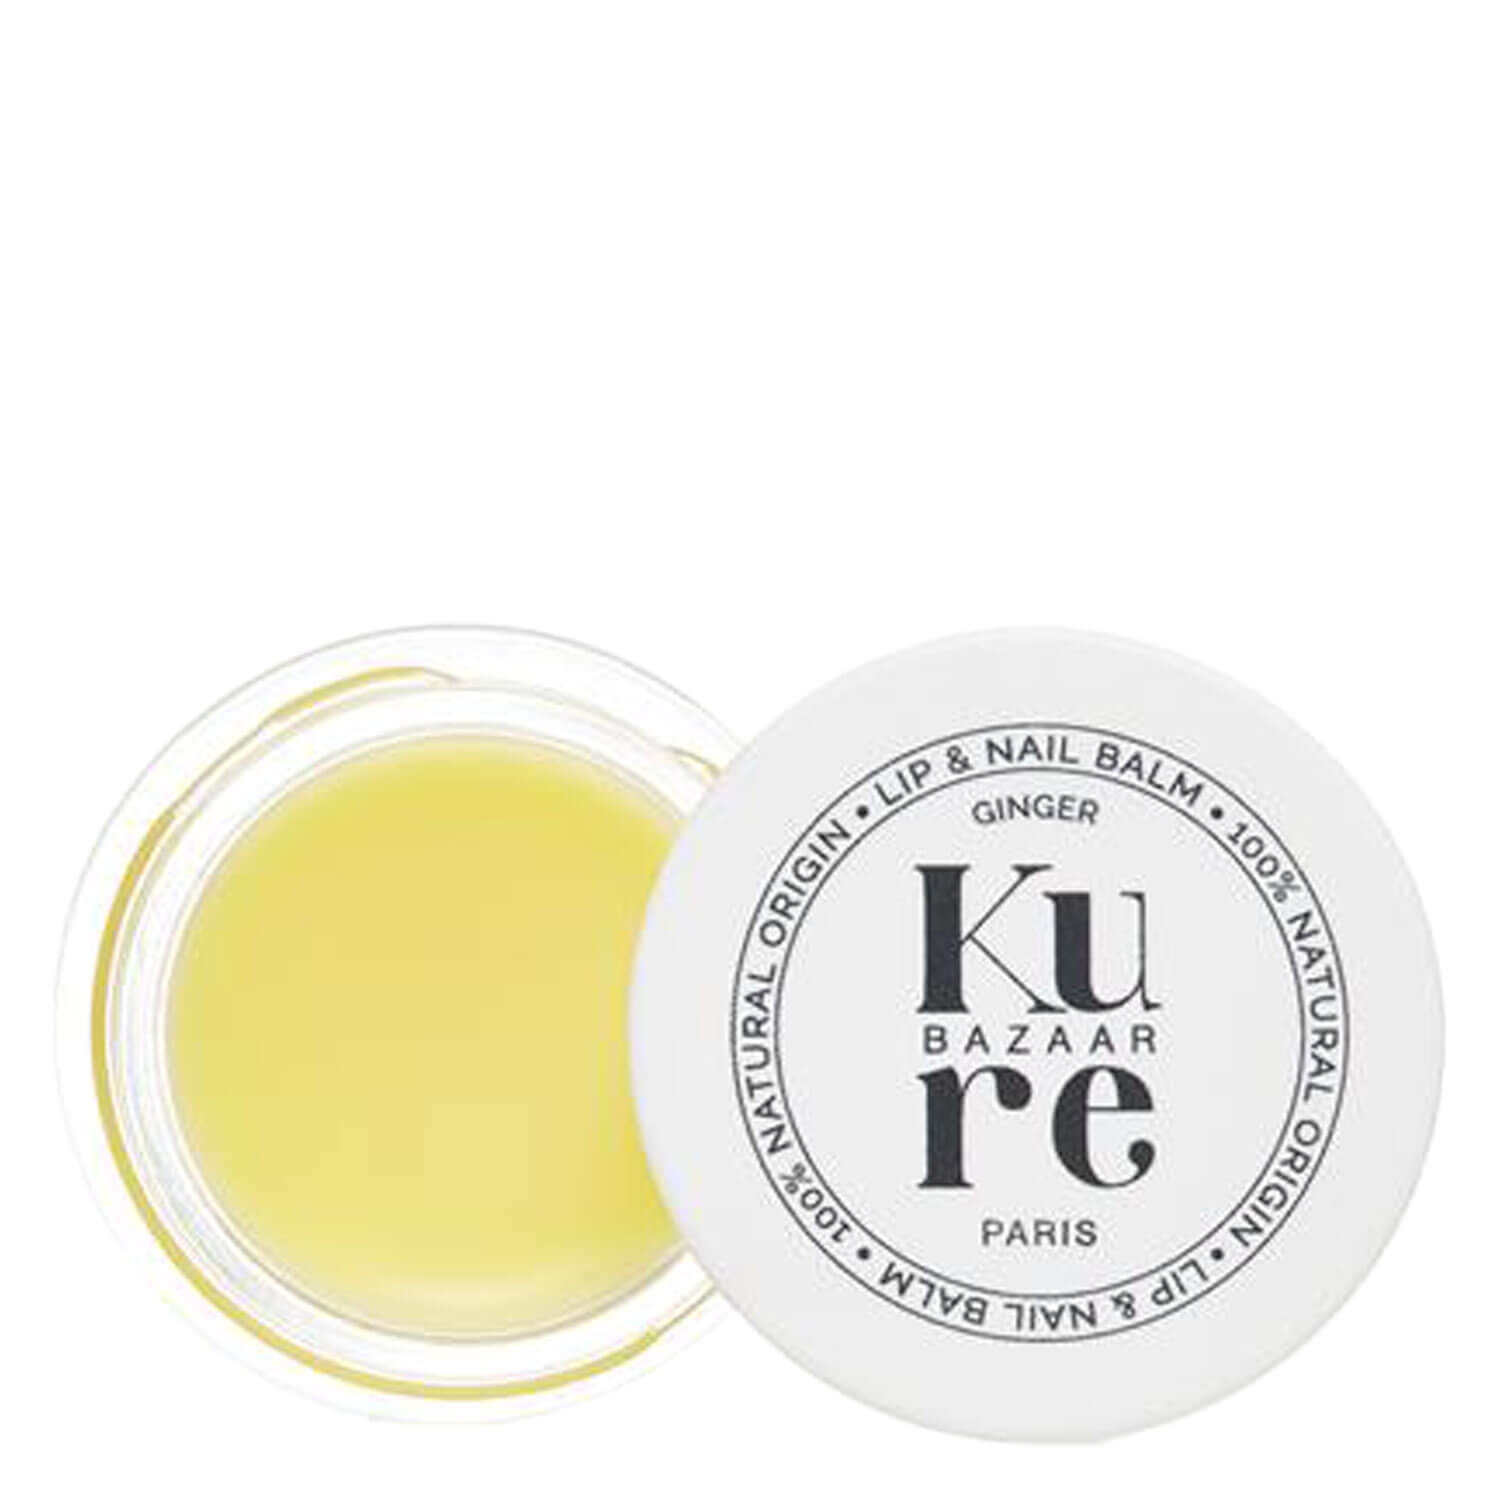 Product image from Kure BAZAAR - Ginger Lip & Nail Balm